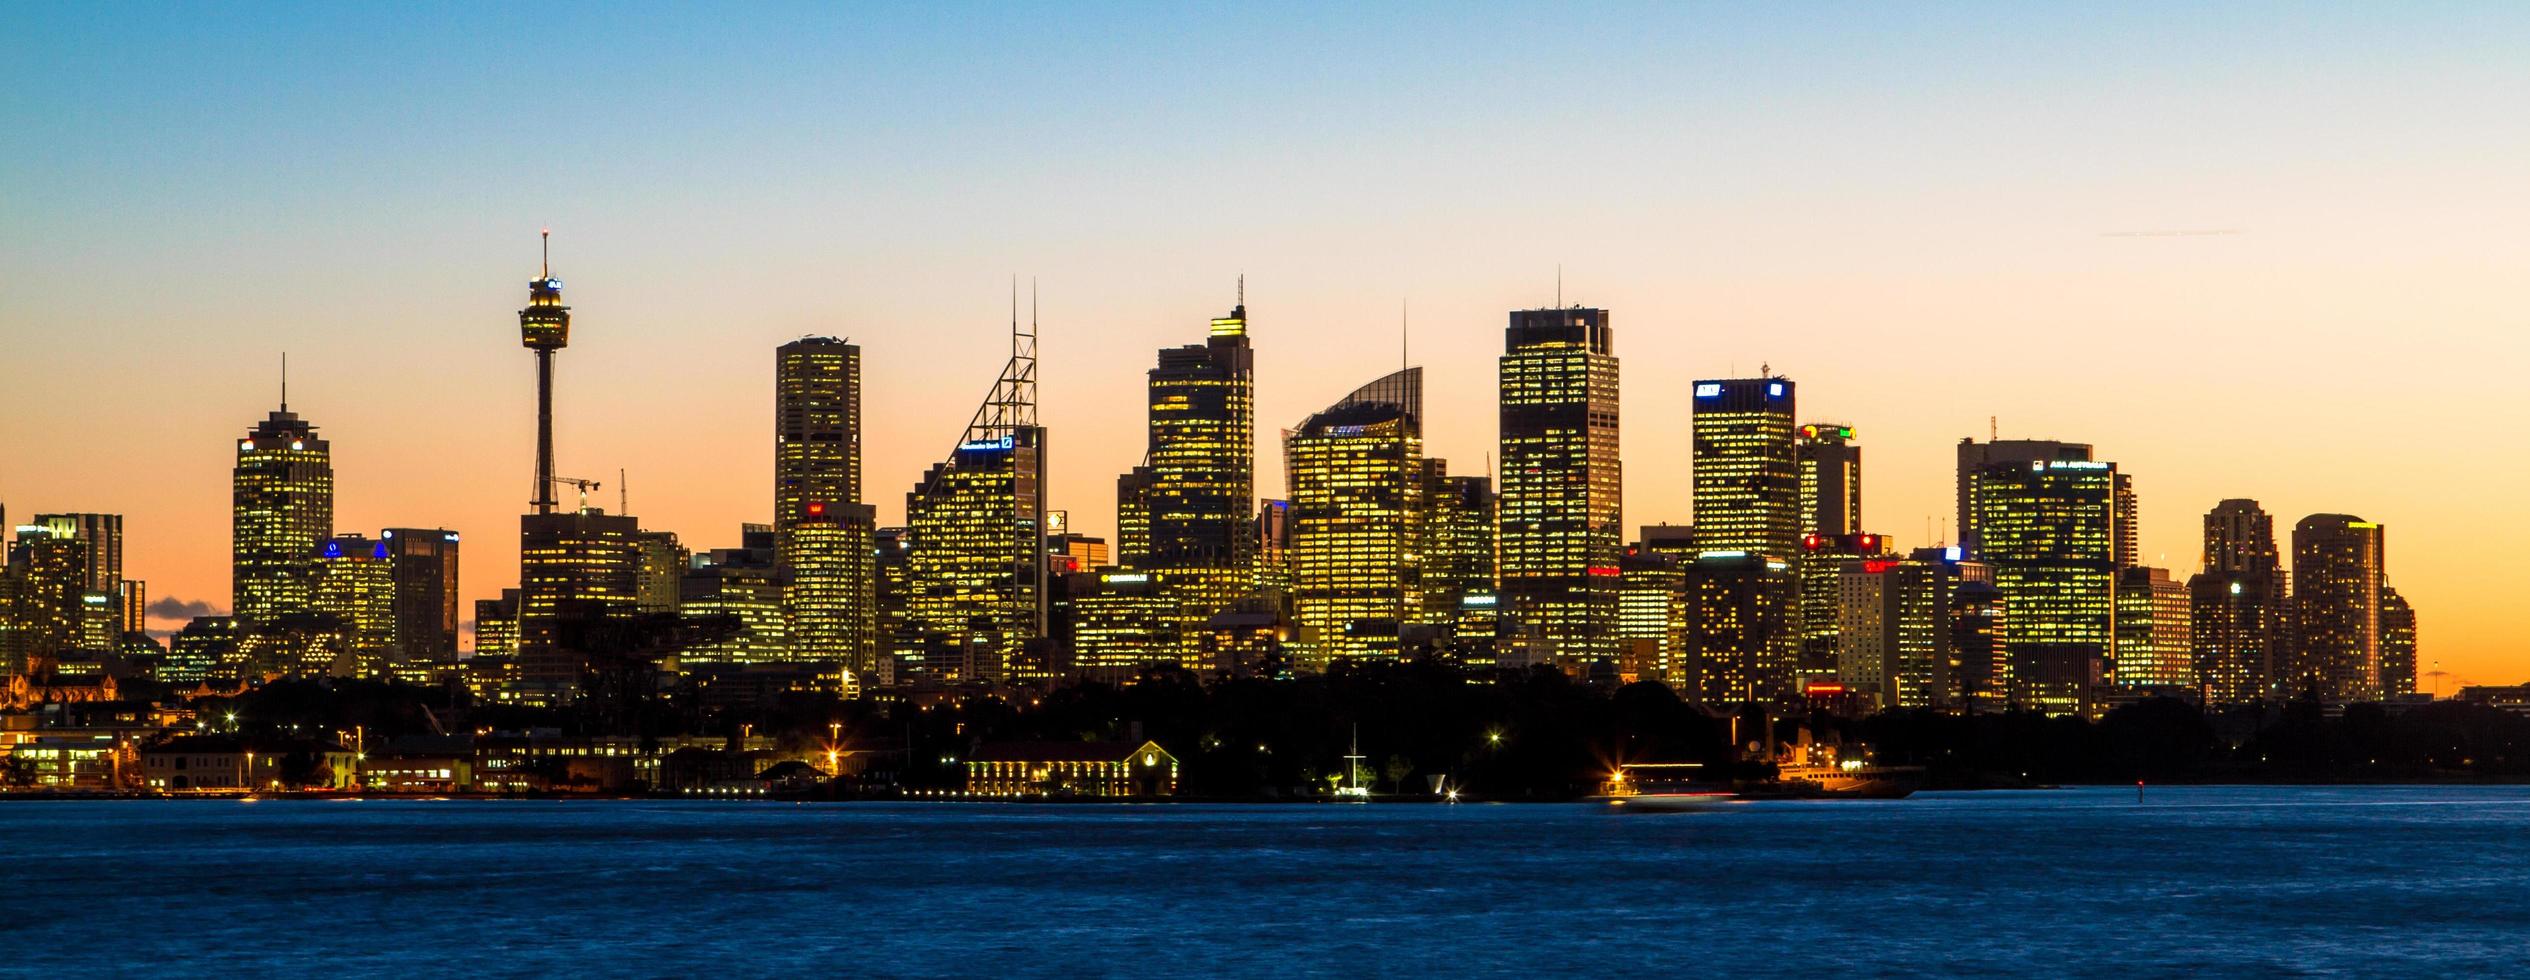 Sydney, Australia, 2020 - Cityscape at sunset photo